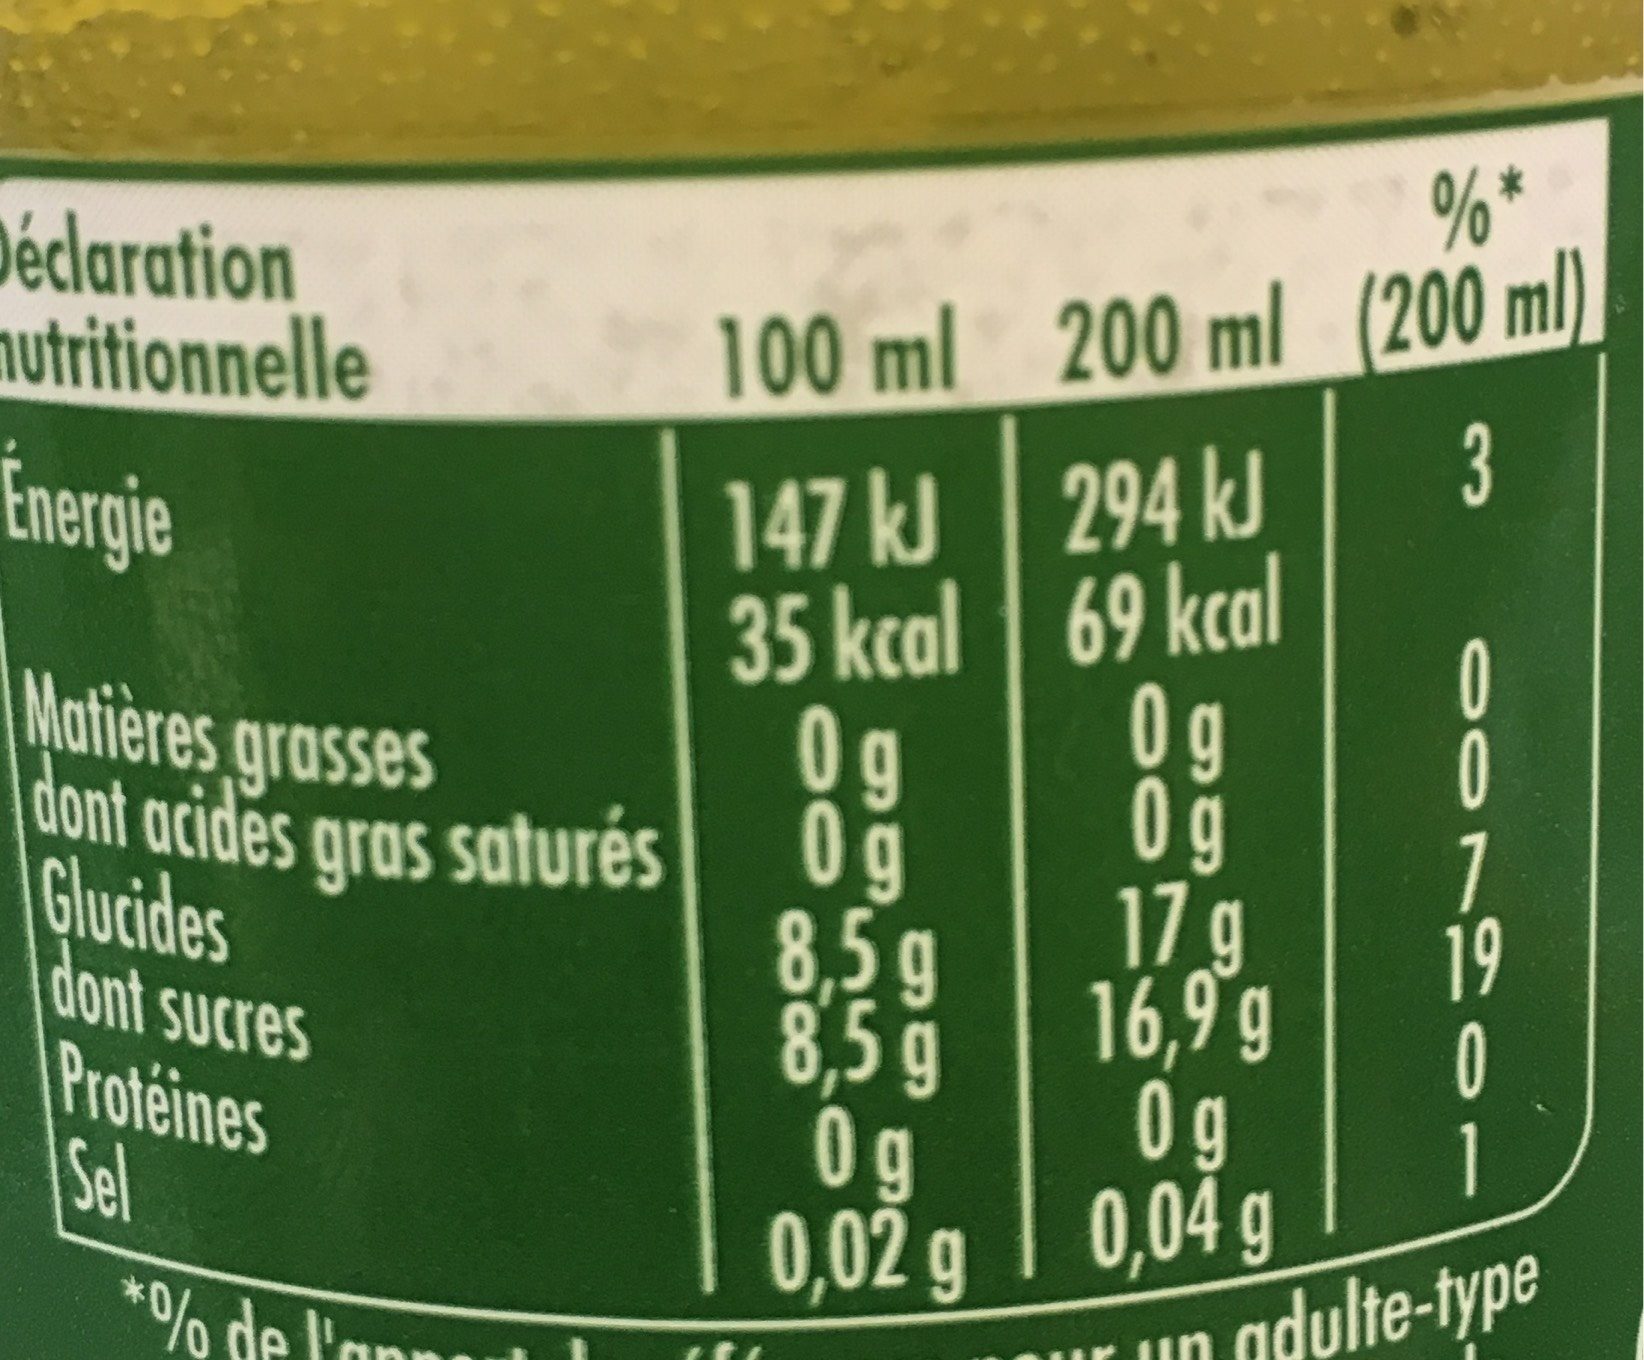 ginger ale - Tableau nutritionnel